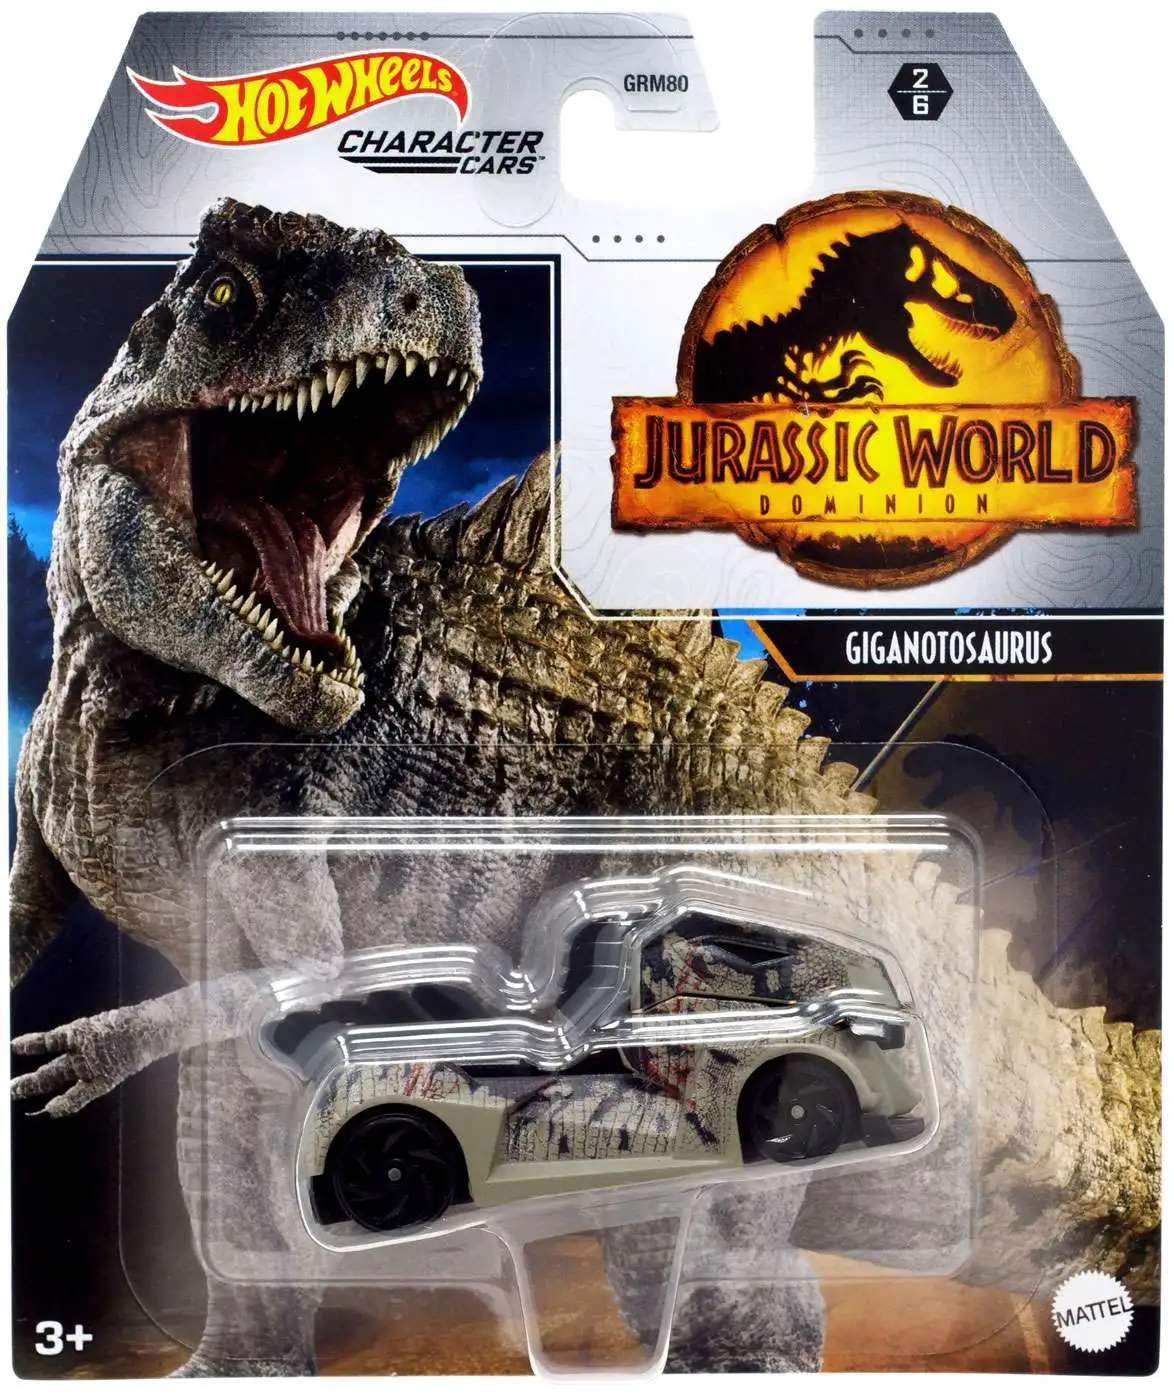 Jurassic World Dominion Hot Wheels Character Cars Giganotosaurus Die Cast Car